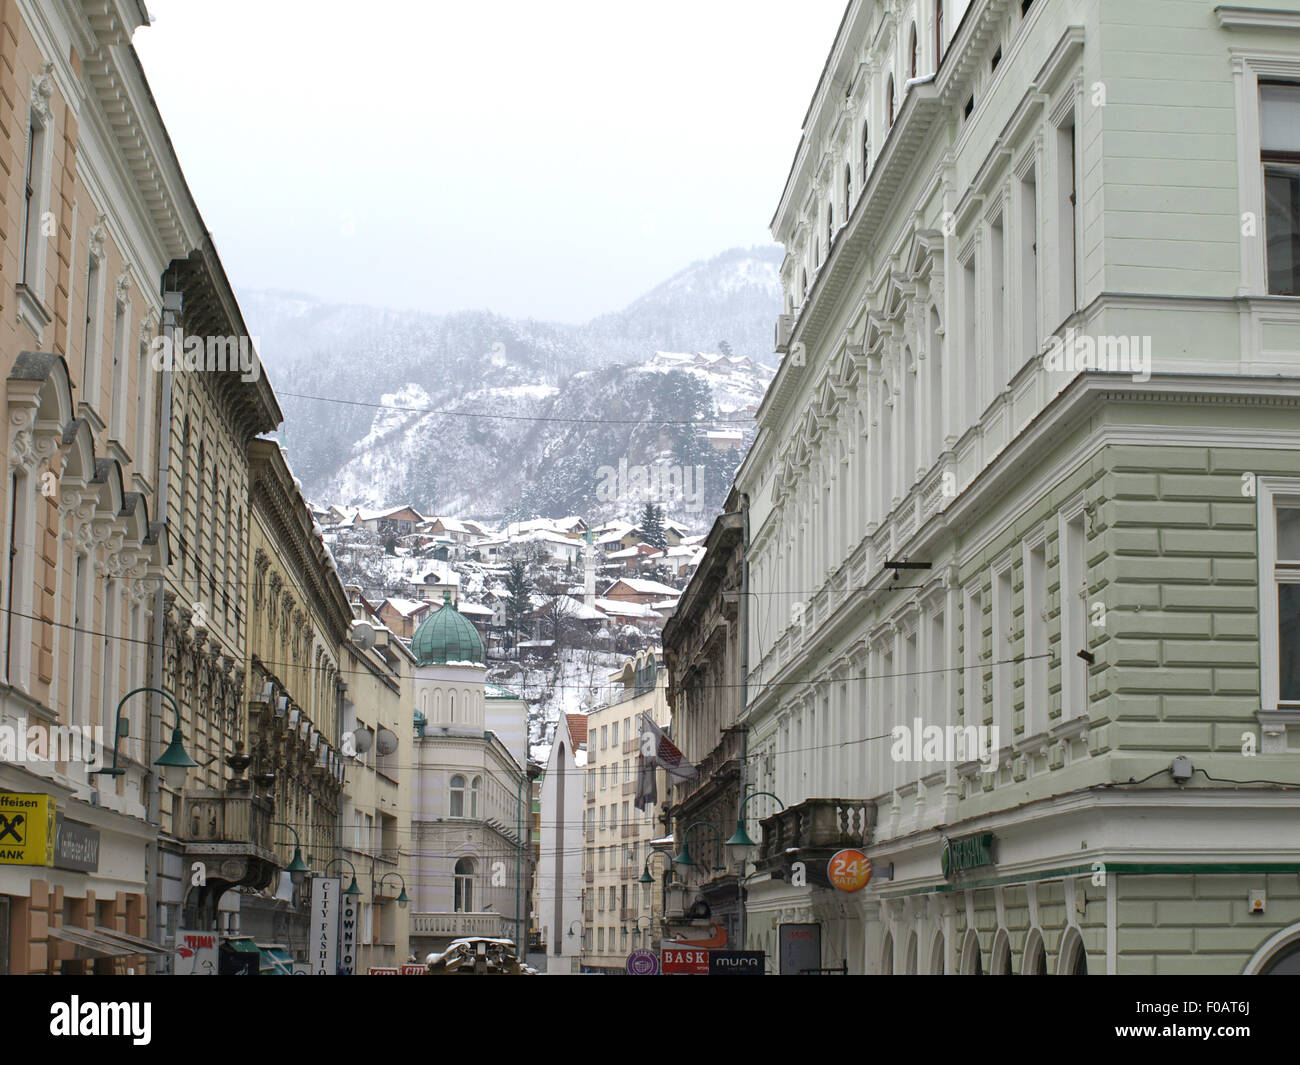 Sarajevo under snow, Urban Area Stock Photo